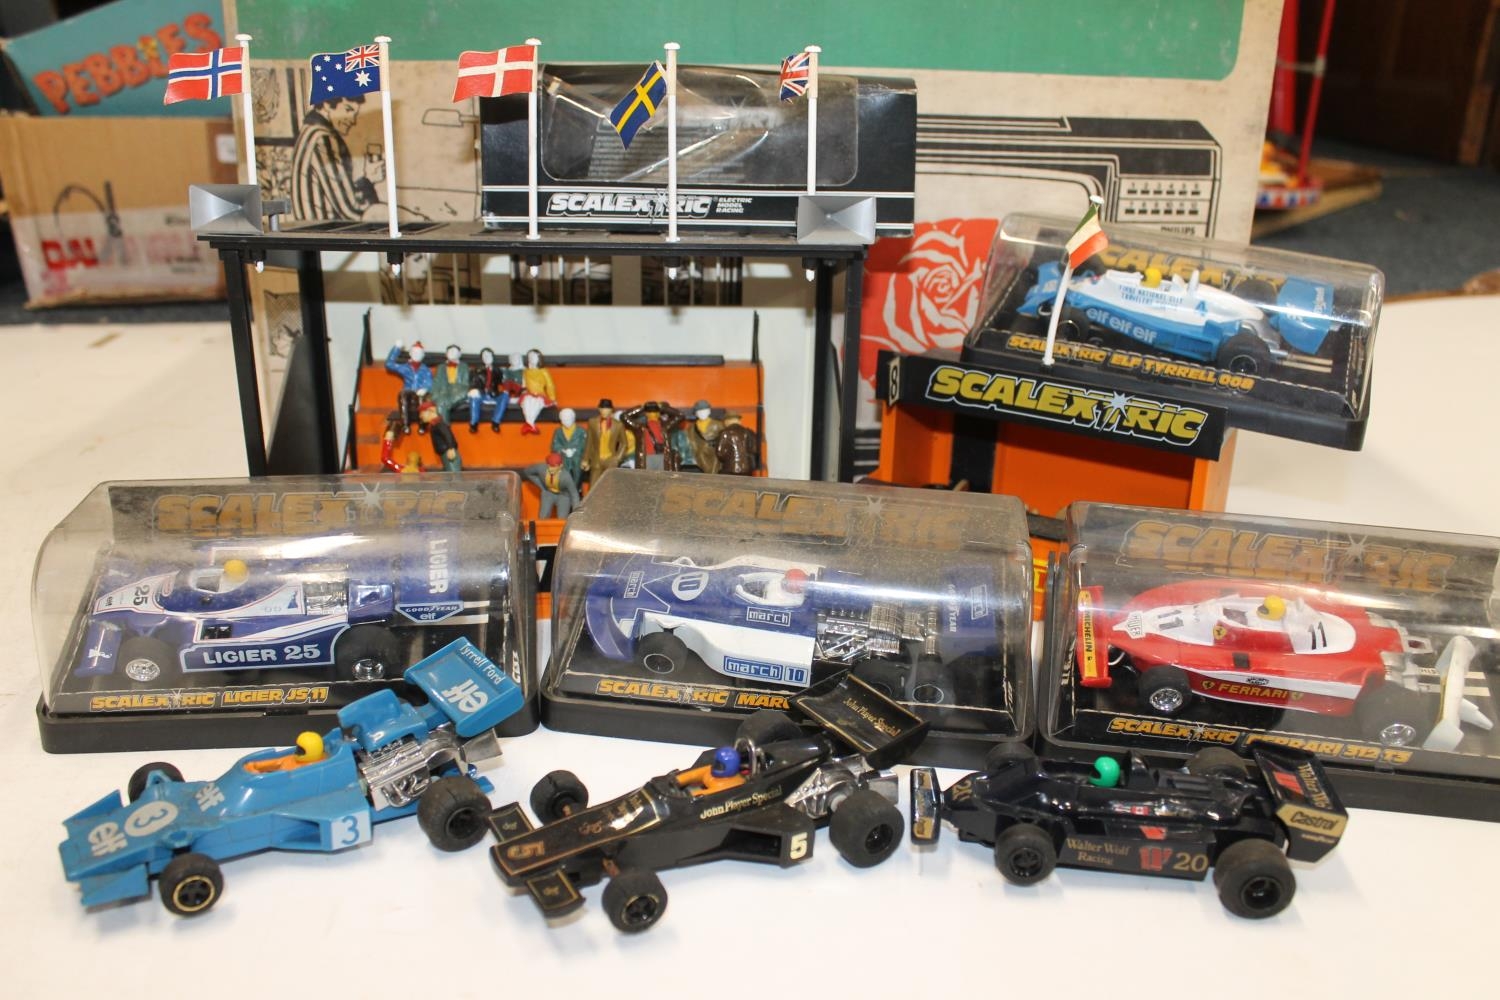 Scalextric Model Motor Racing items to include C135 ELF Tyrell 008, C137 Liguer JS11, C136 Ferrari